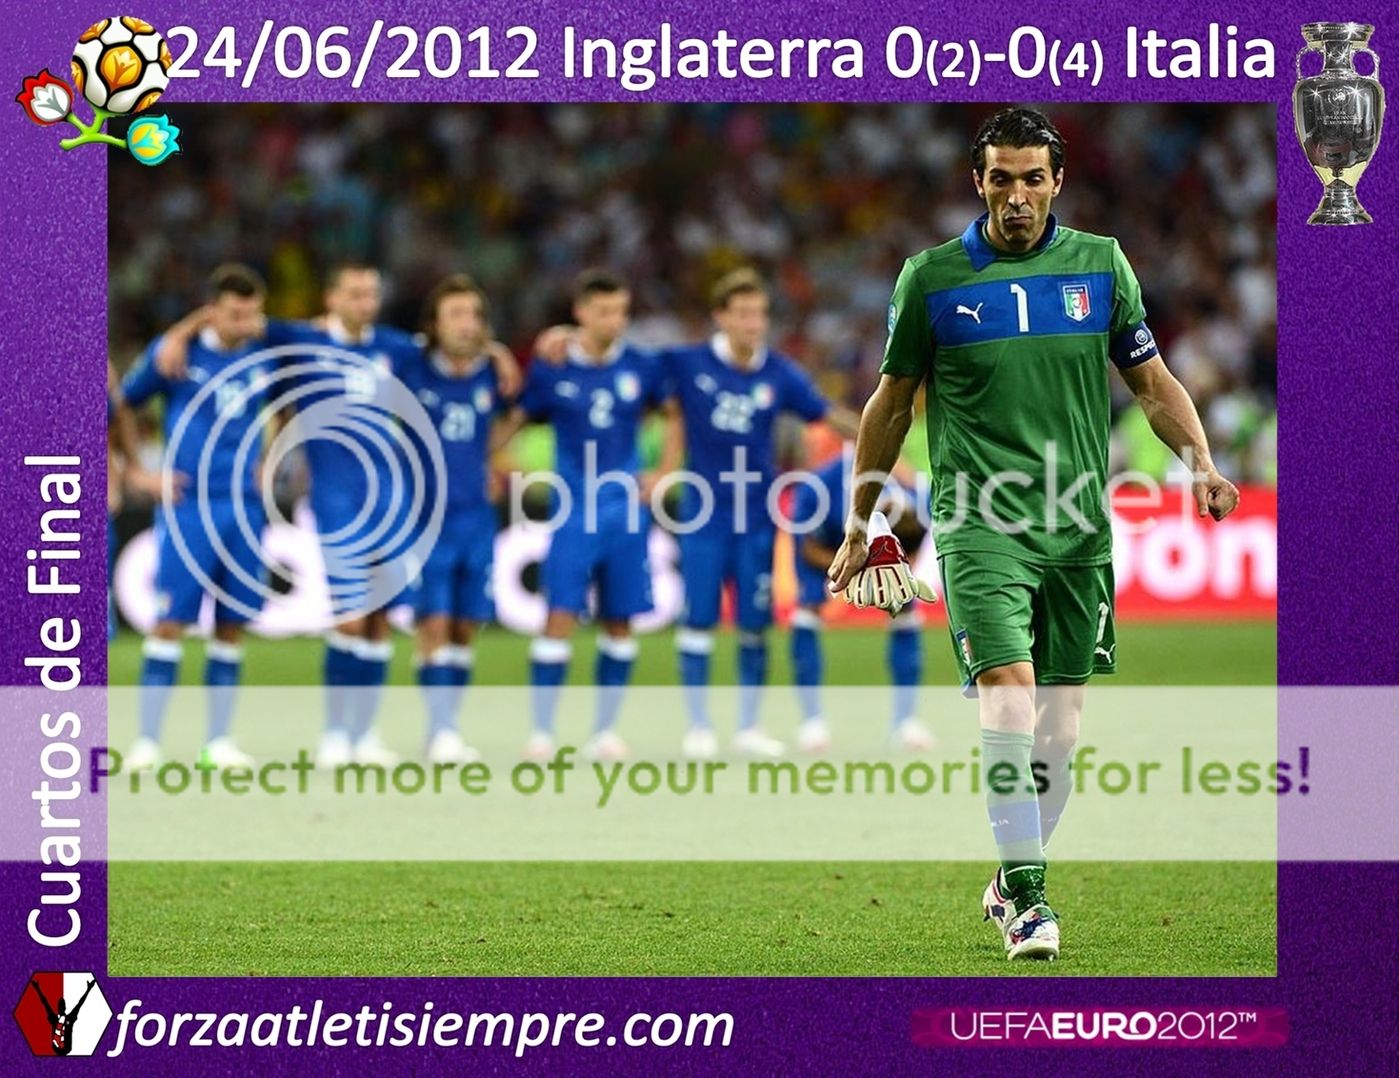 INGLATERRA 0(2) - ITALIA 0(4) - Un penalti para la eternidad 180Copiar-3